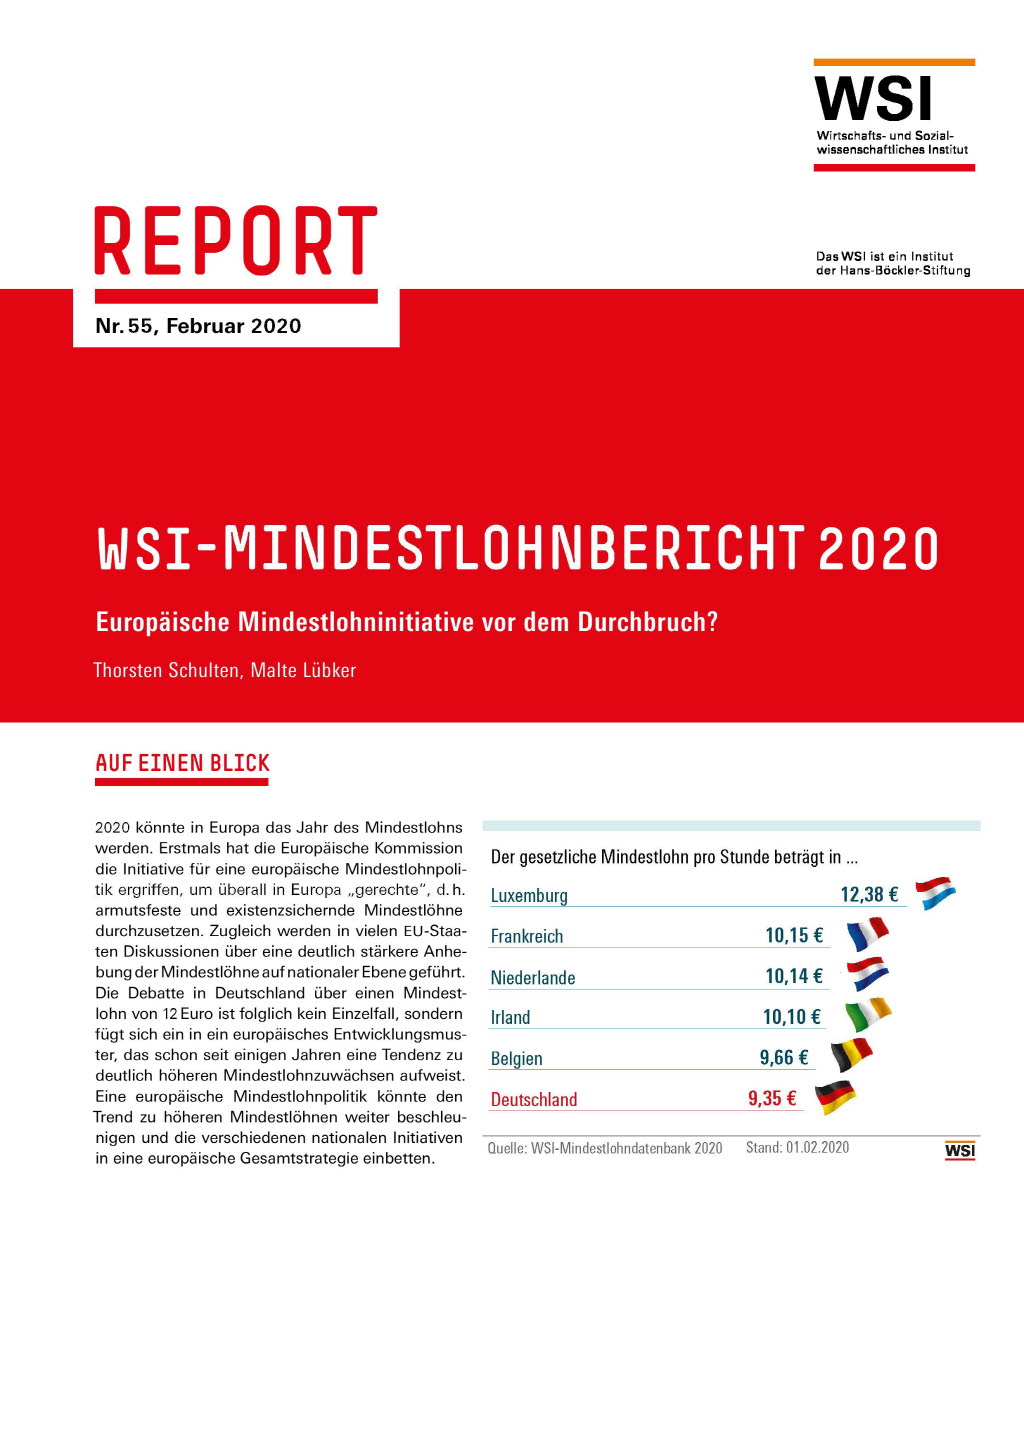 WSI-Mindestlohnbericht 2020